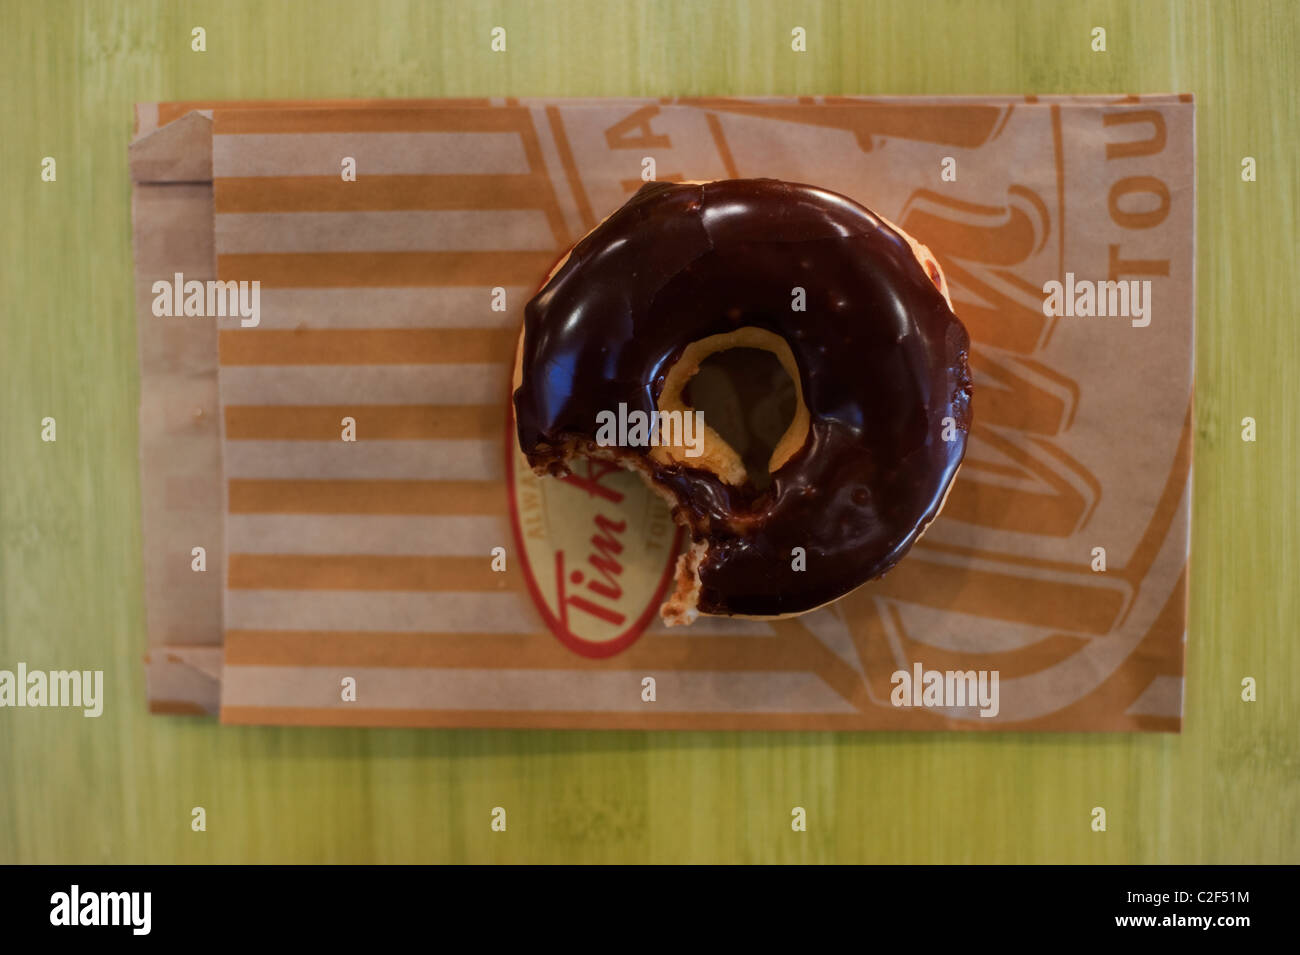 Tim Hortons' New Easter Item Is A Donut Lover's Dream